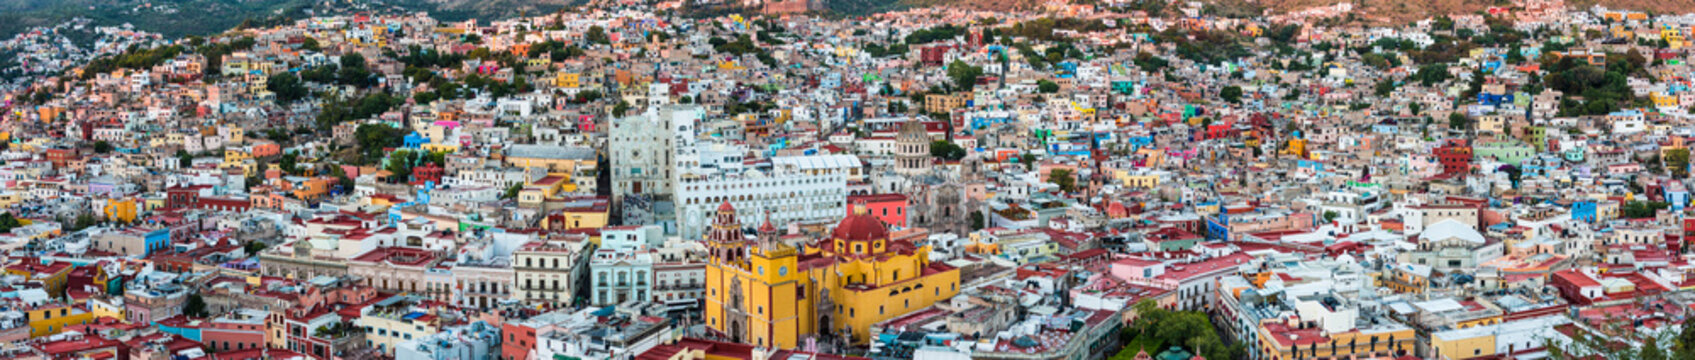 Panorama de casas coloridas de las calles de Guanajuato, Mexico © JorgeIvan